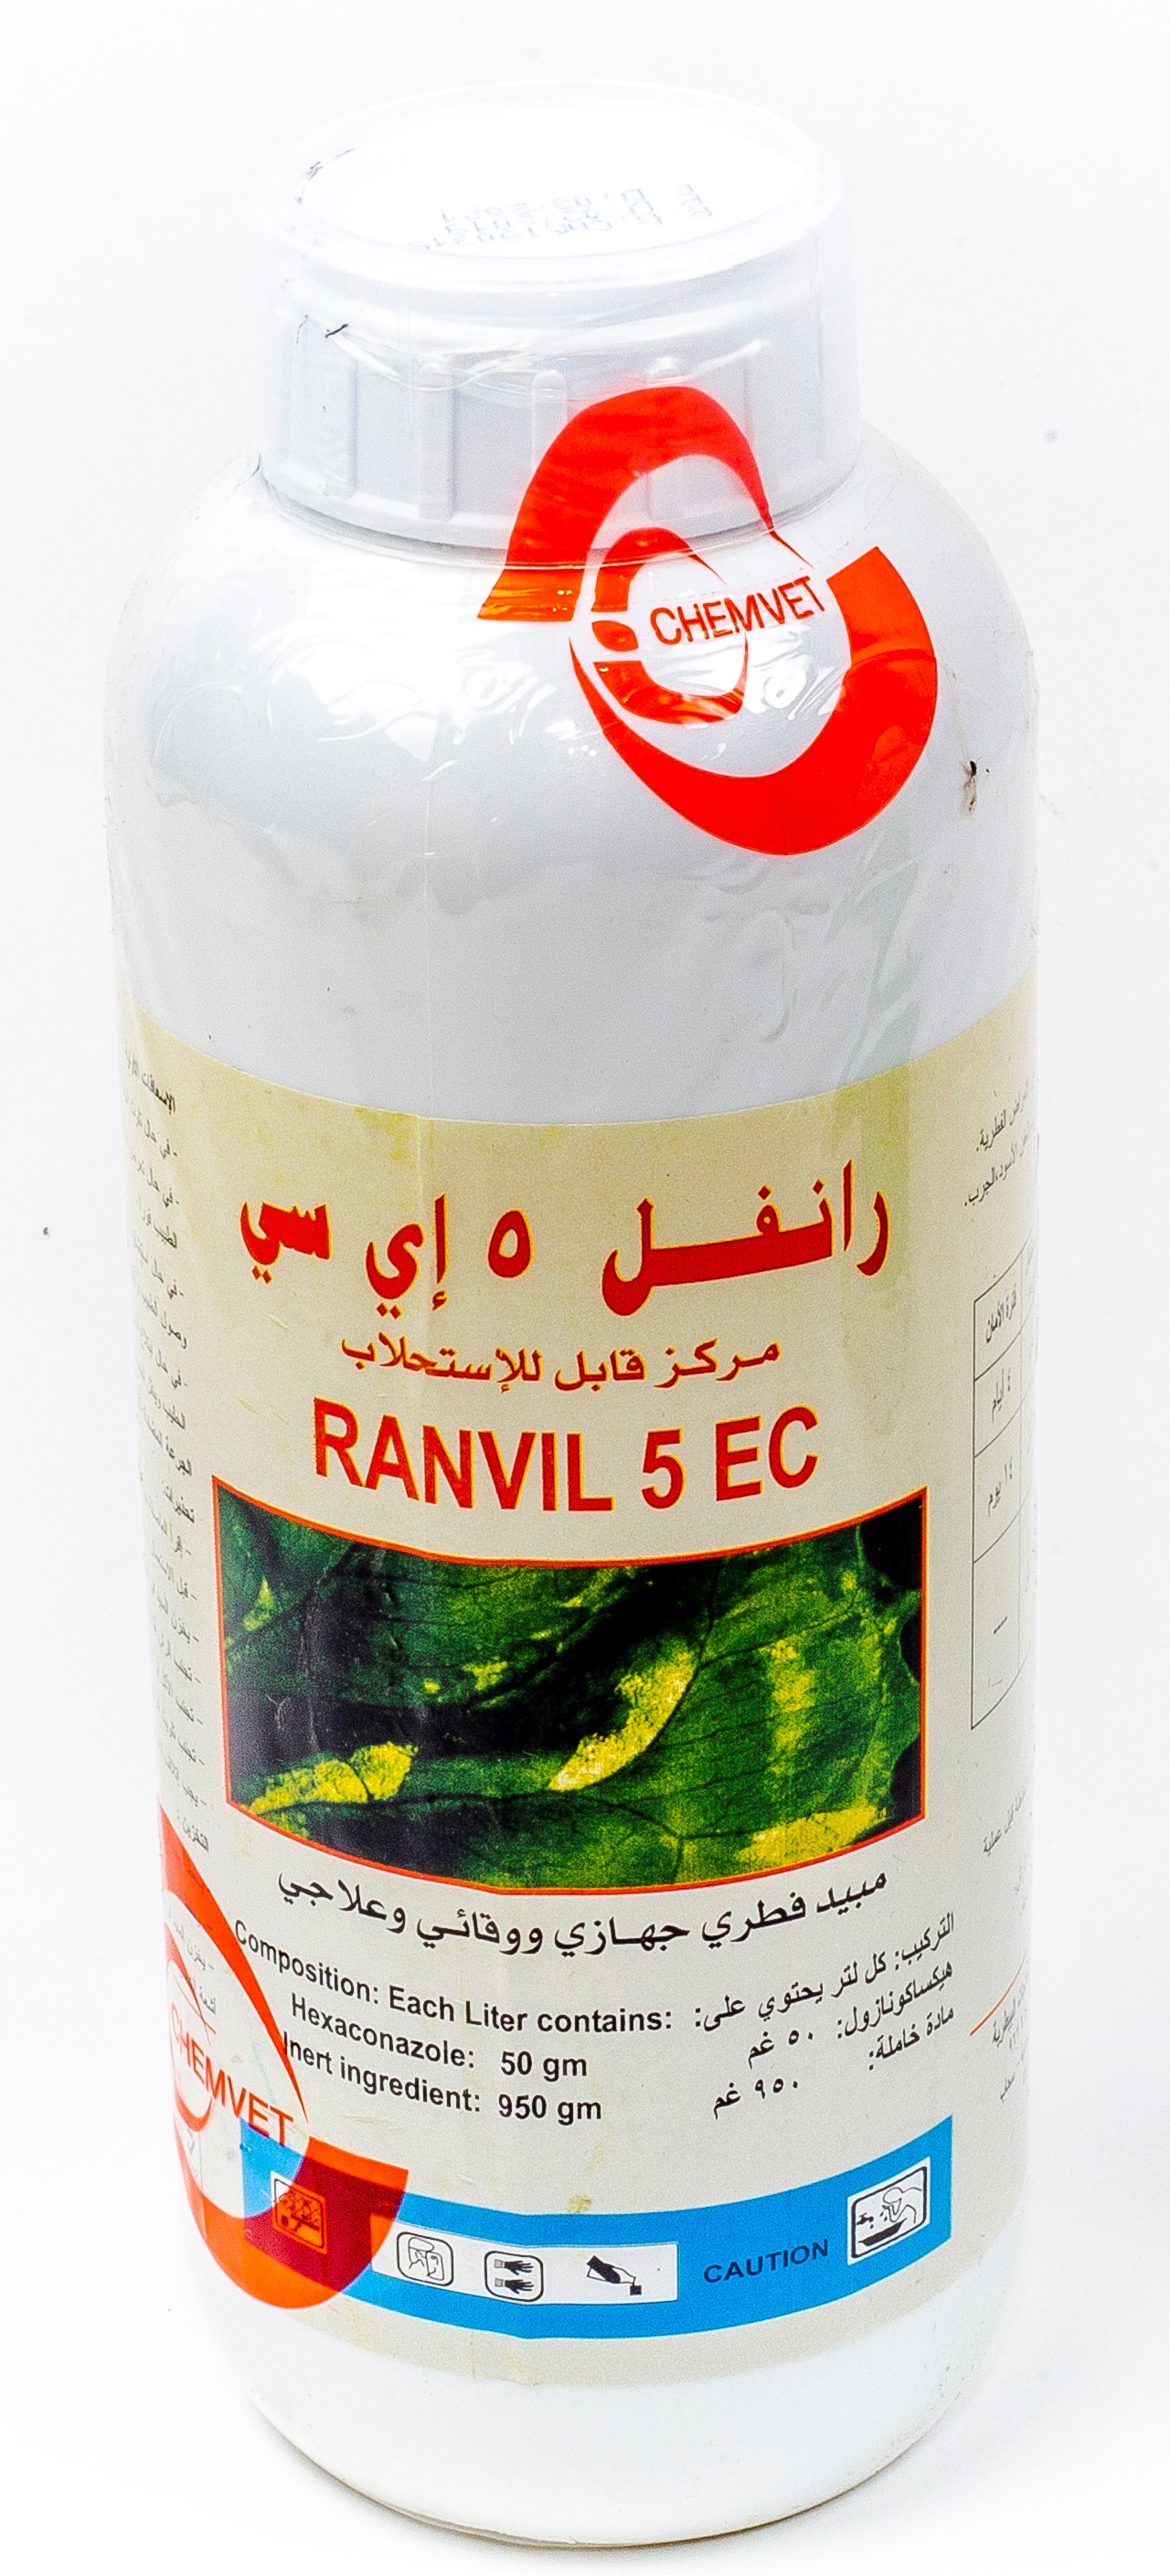 Ranvil 5 EC